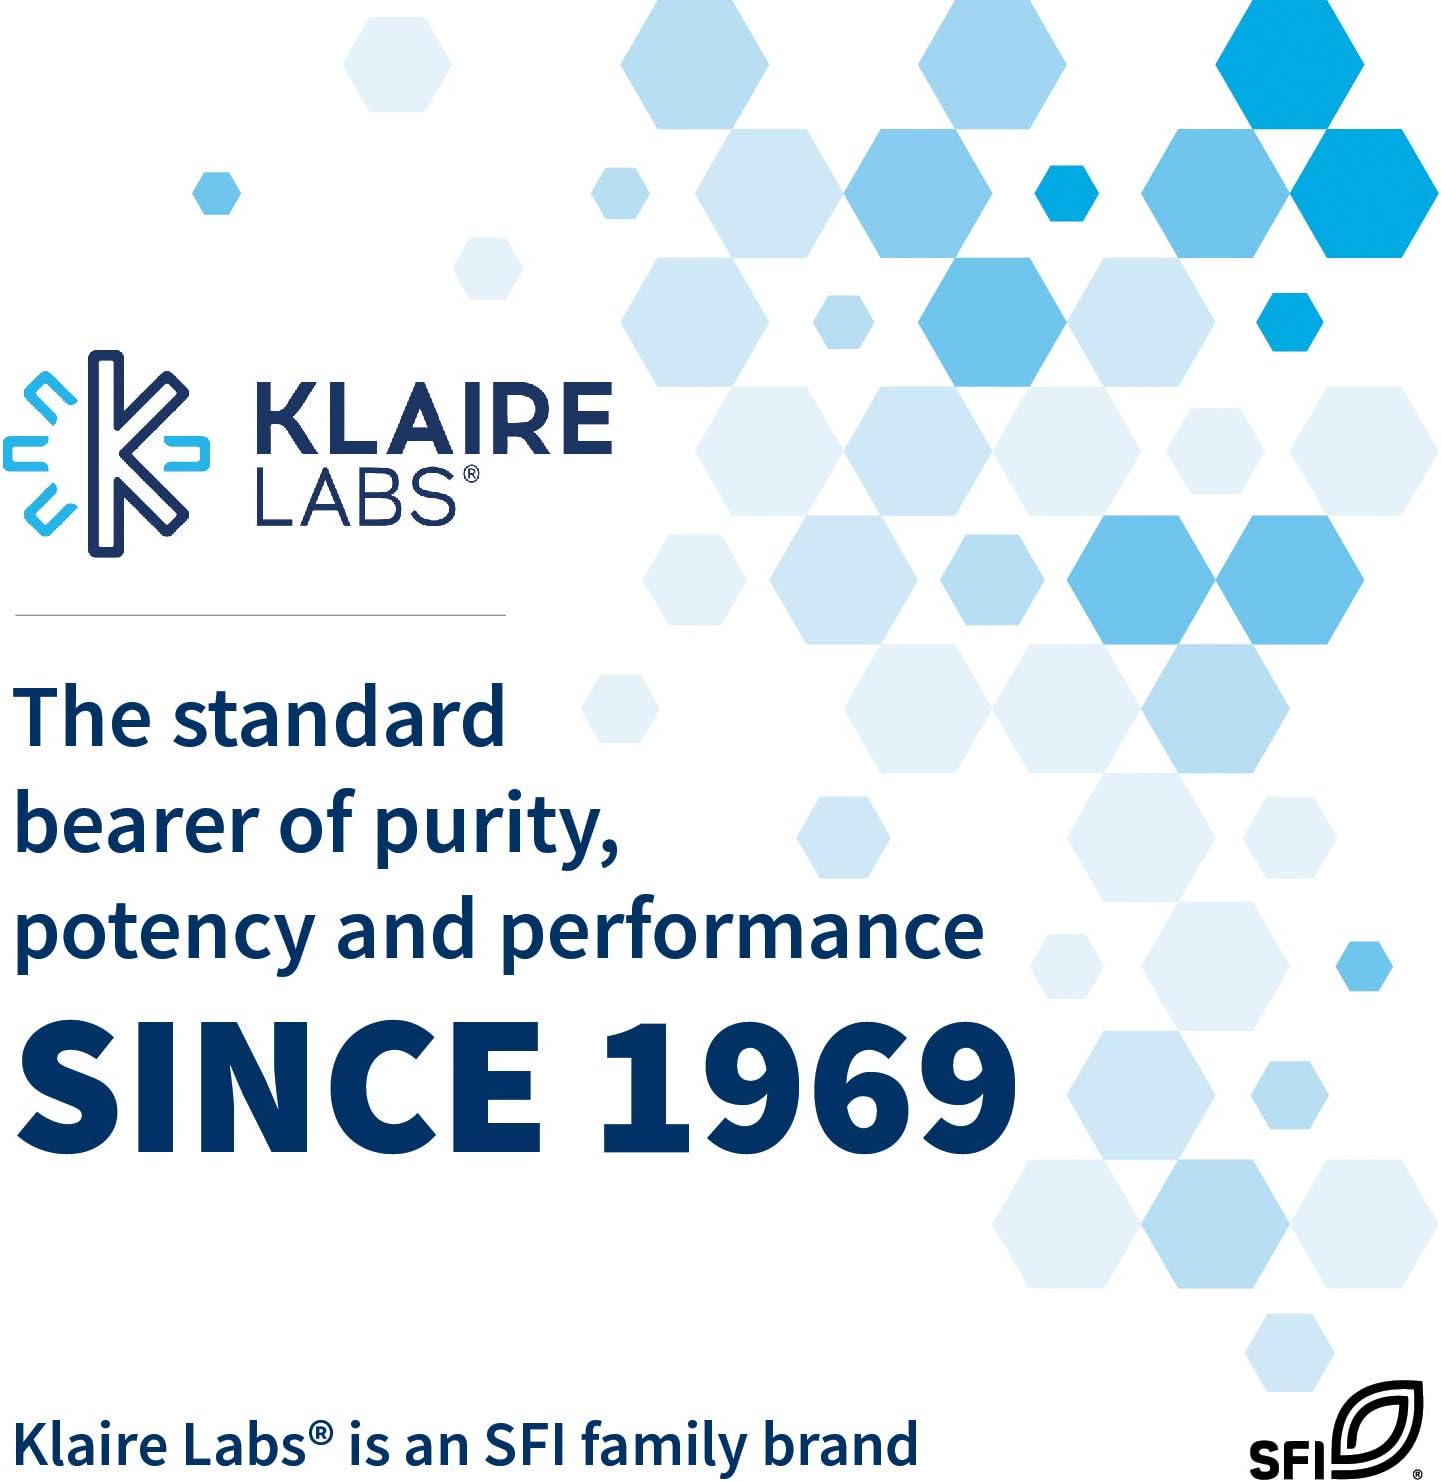 Klaire Labs L-Carnitine Tartrate - 500 mg Amino Acid, Stabilized L-Car